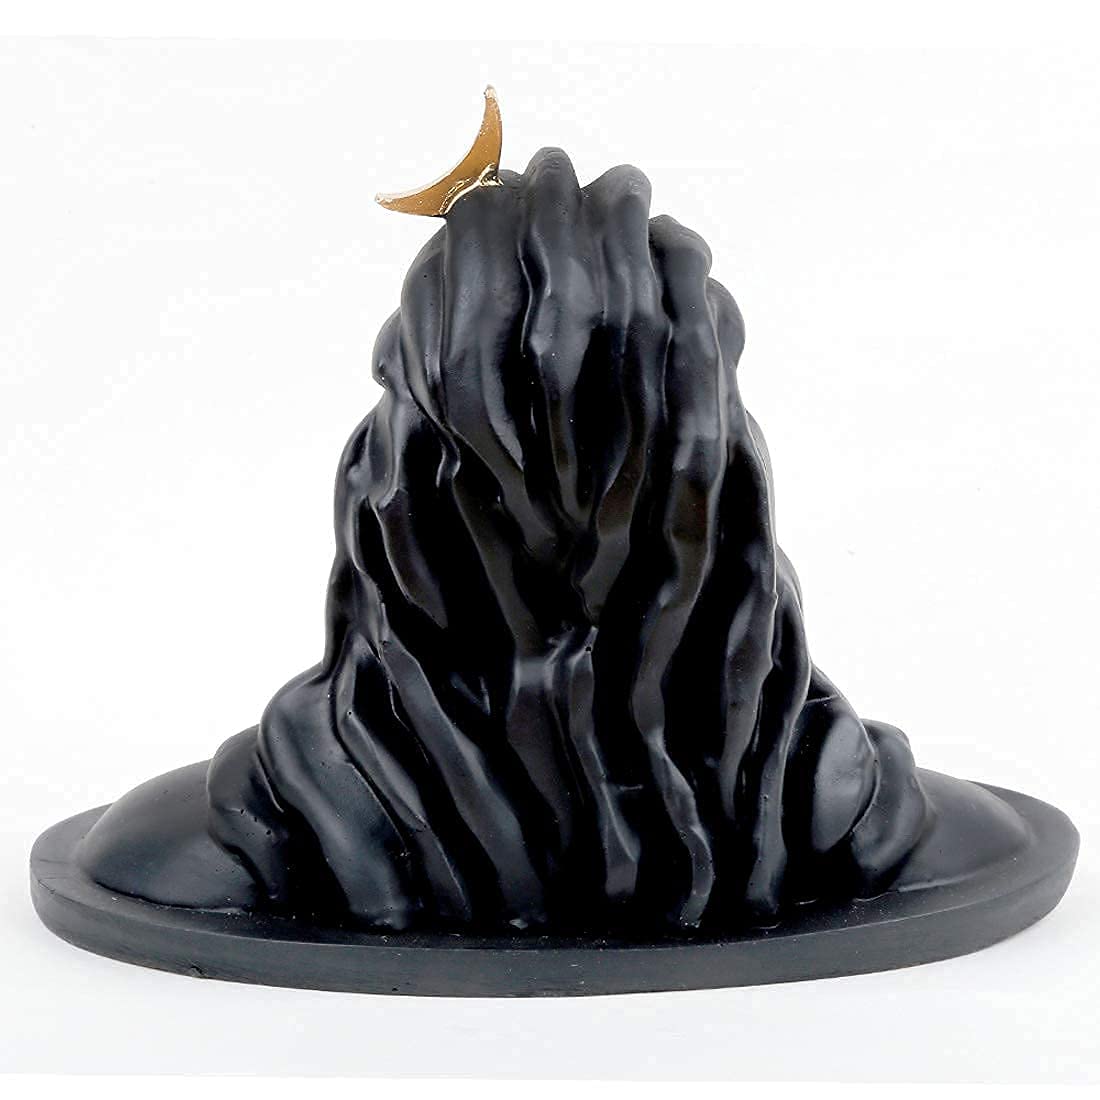 Adiyogi Statue Shiva Black Color Idol for Home Décor, Gift & Puja, Car Dashboard Statue | Made in India( 4.5 inch ) - Decorwala